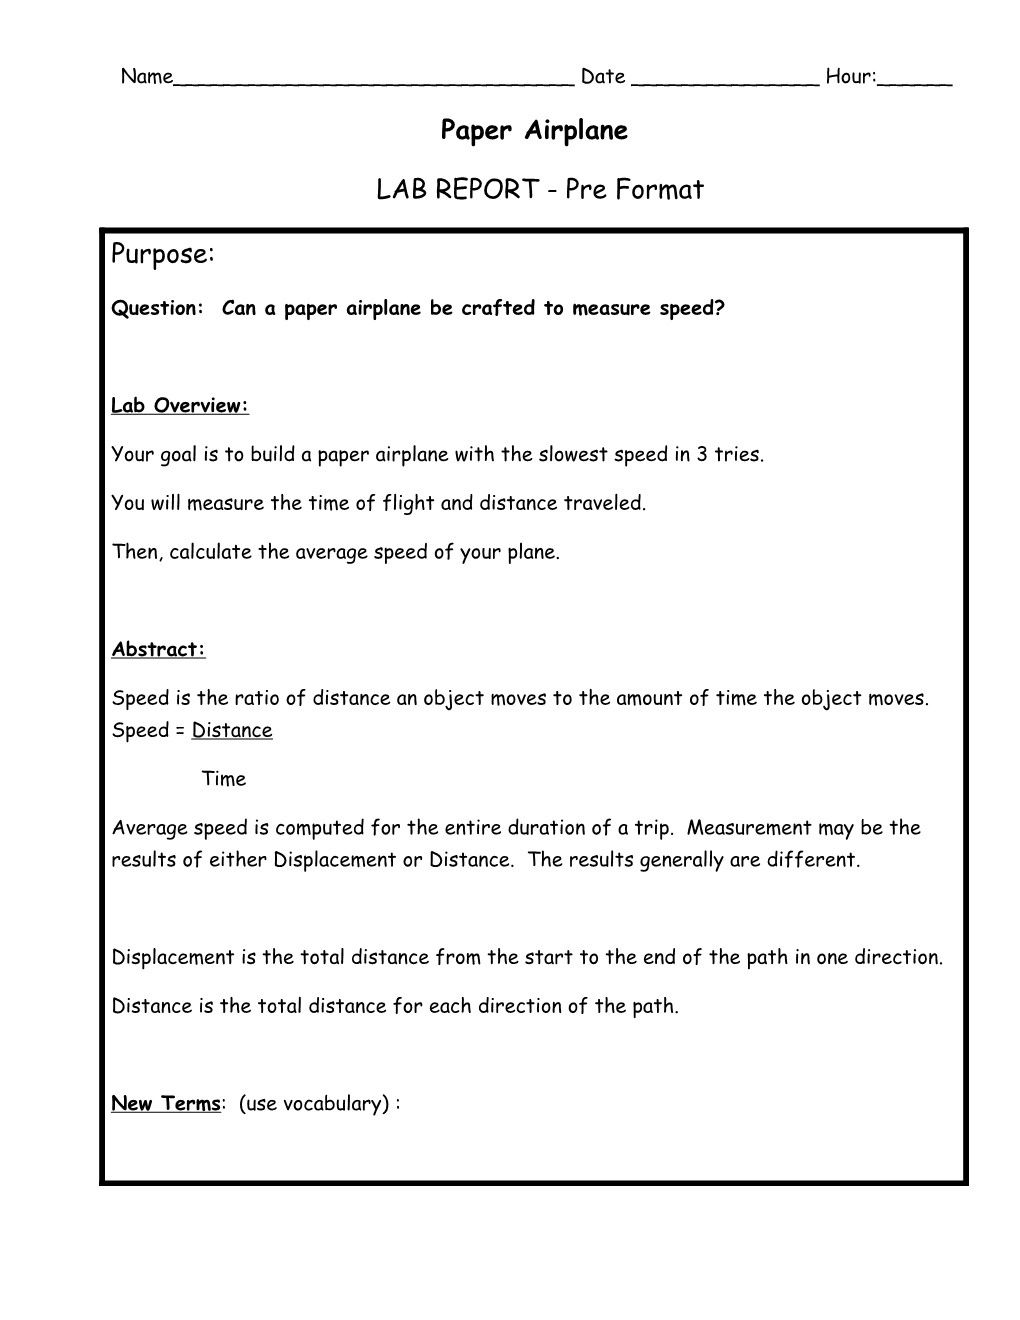 LAB REPORT - Pre Format